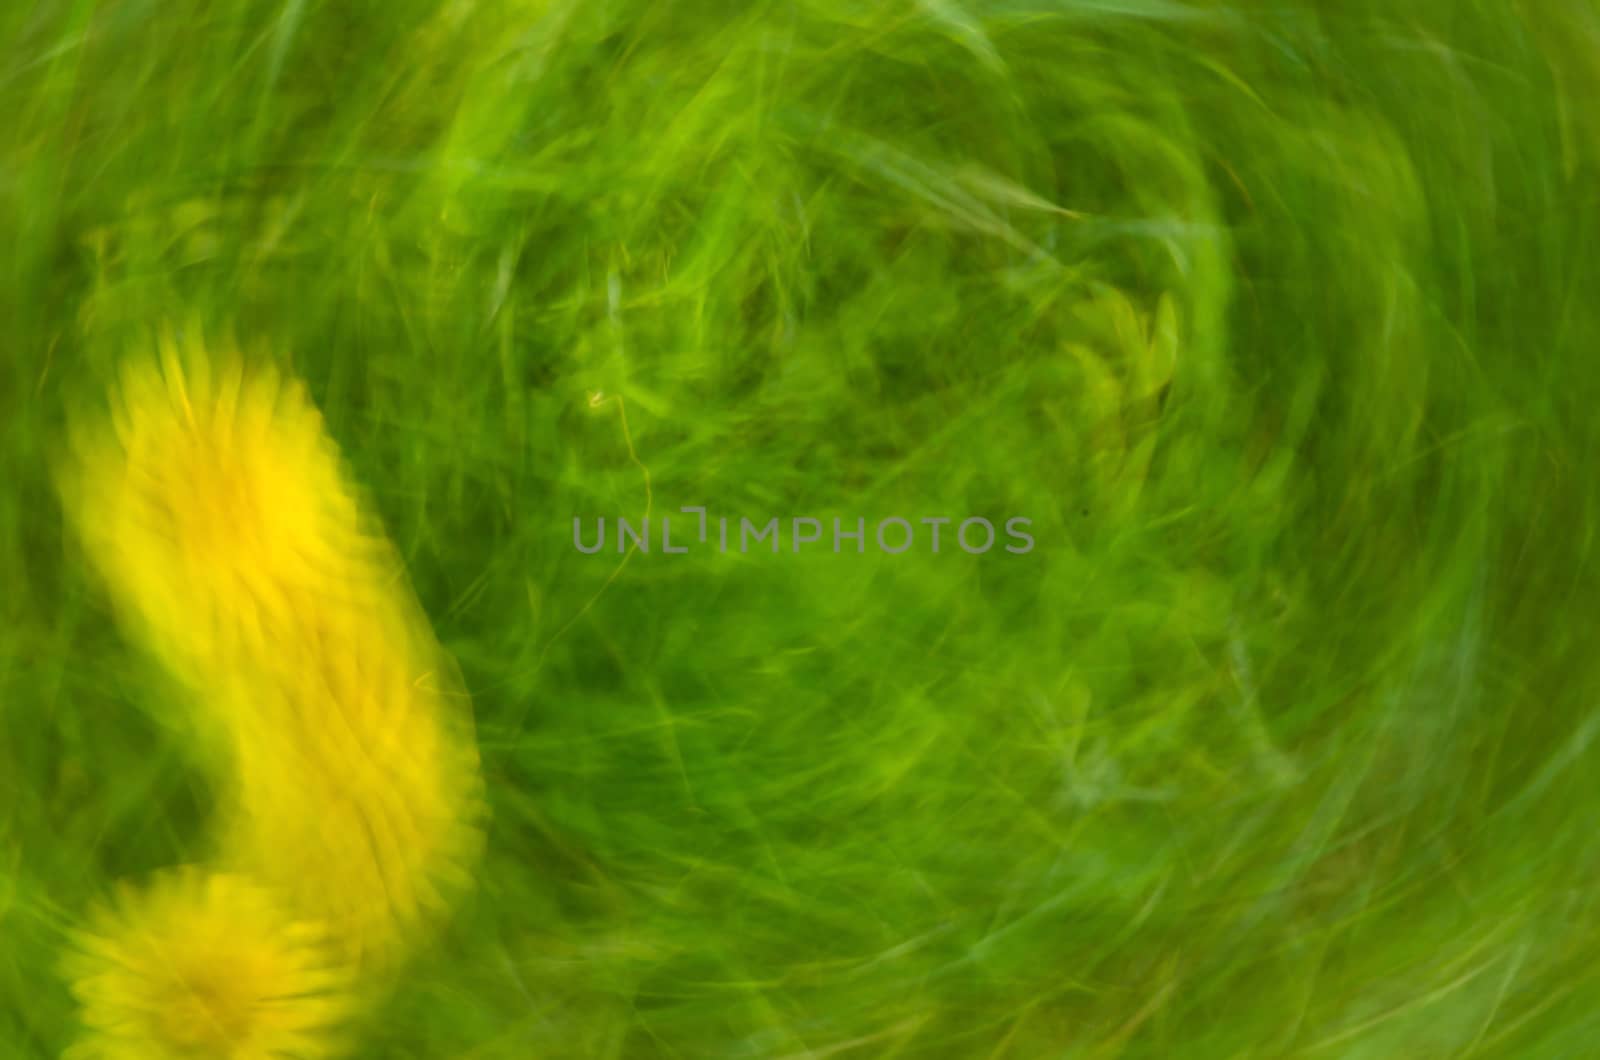 Blur green grass background with blur yellow dandelion bloom, easter background.